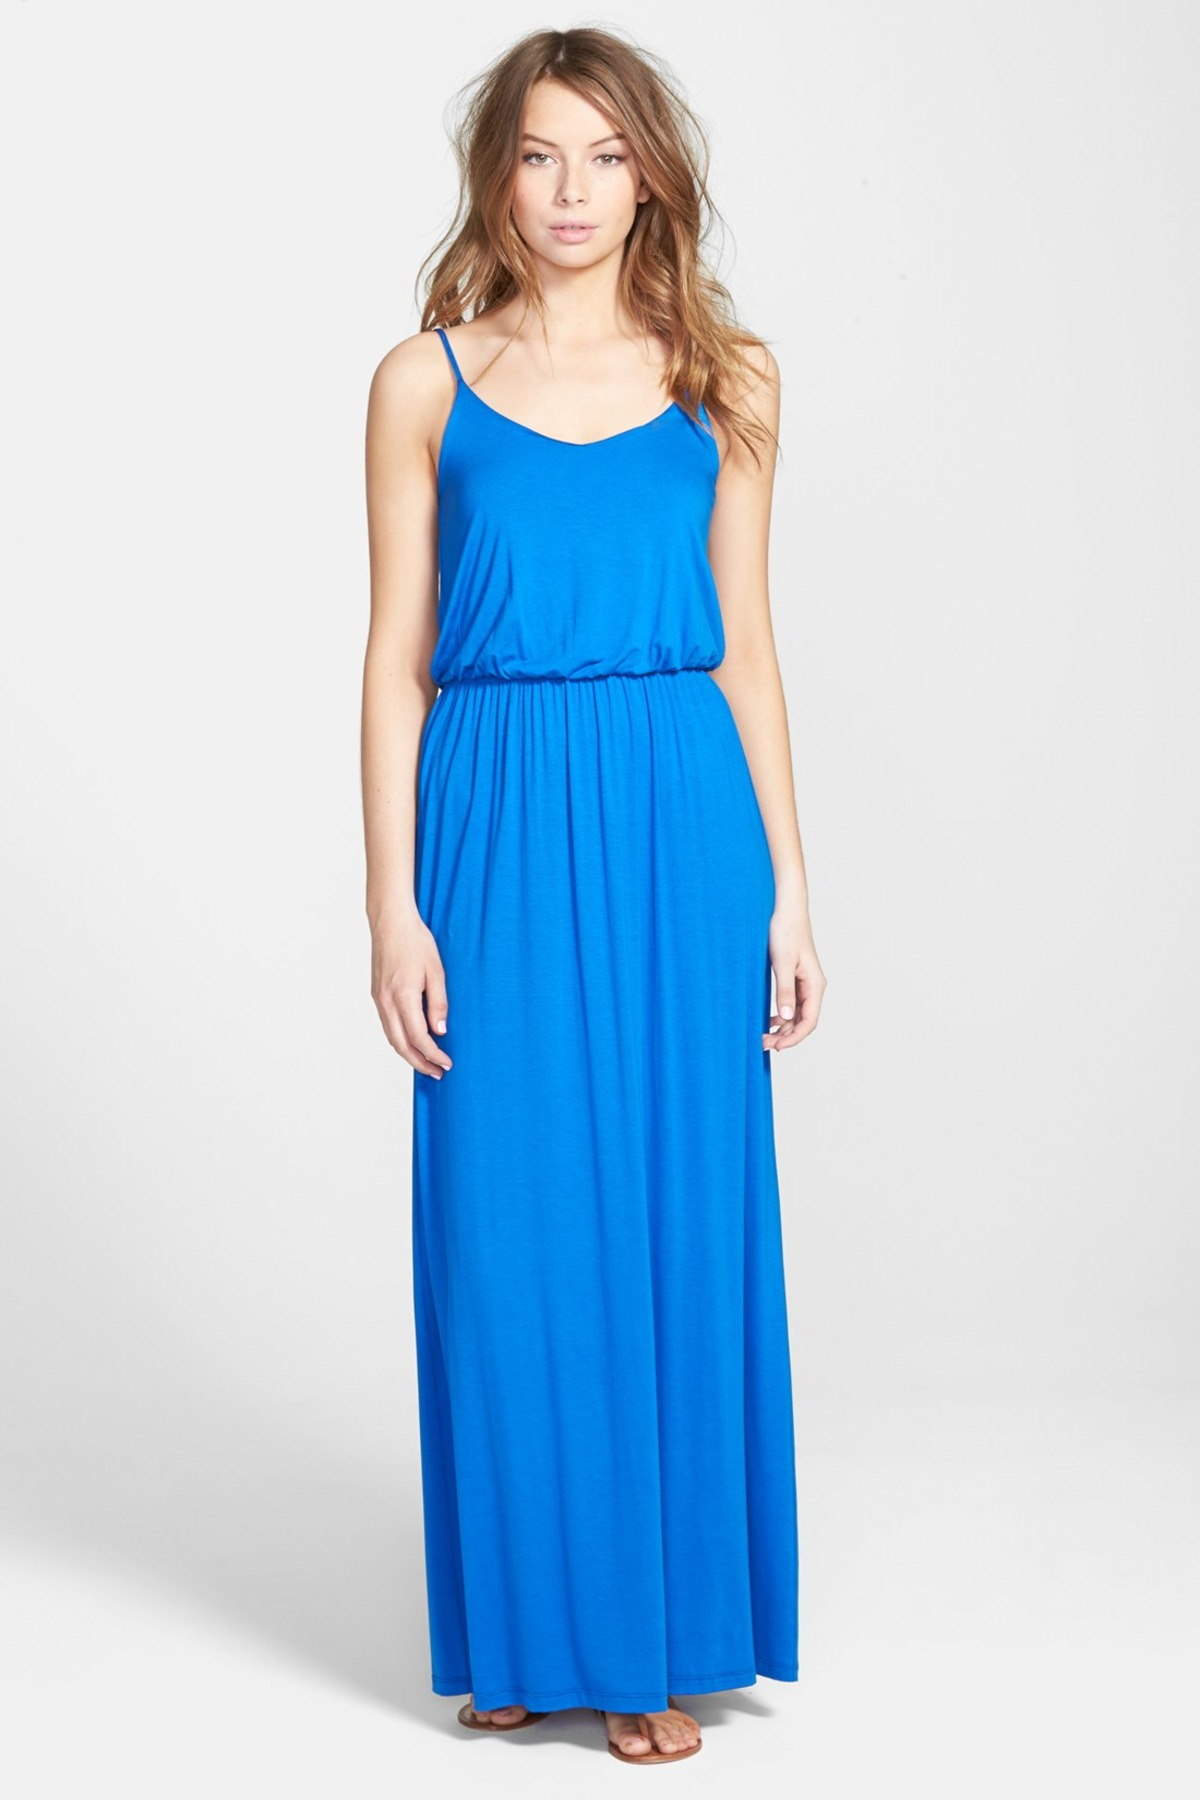 Blue spaghetti strap maxi dress